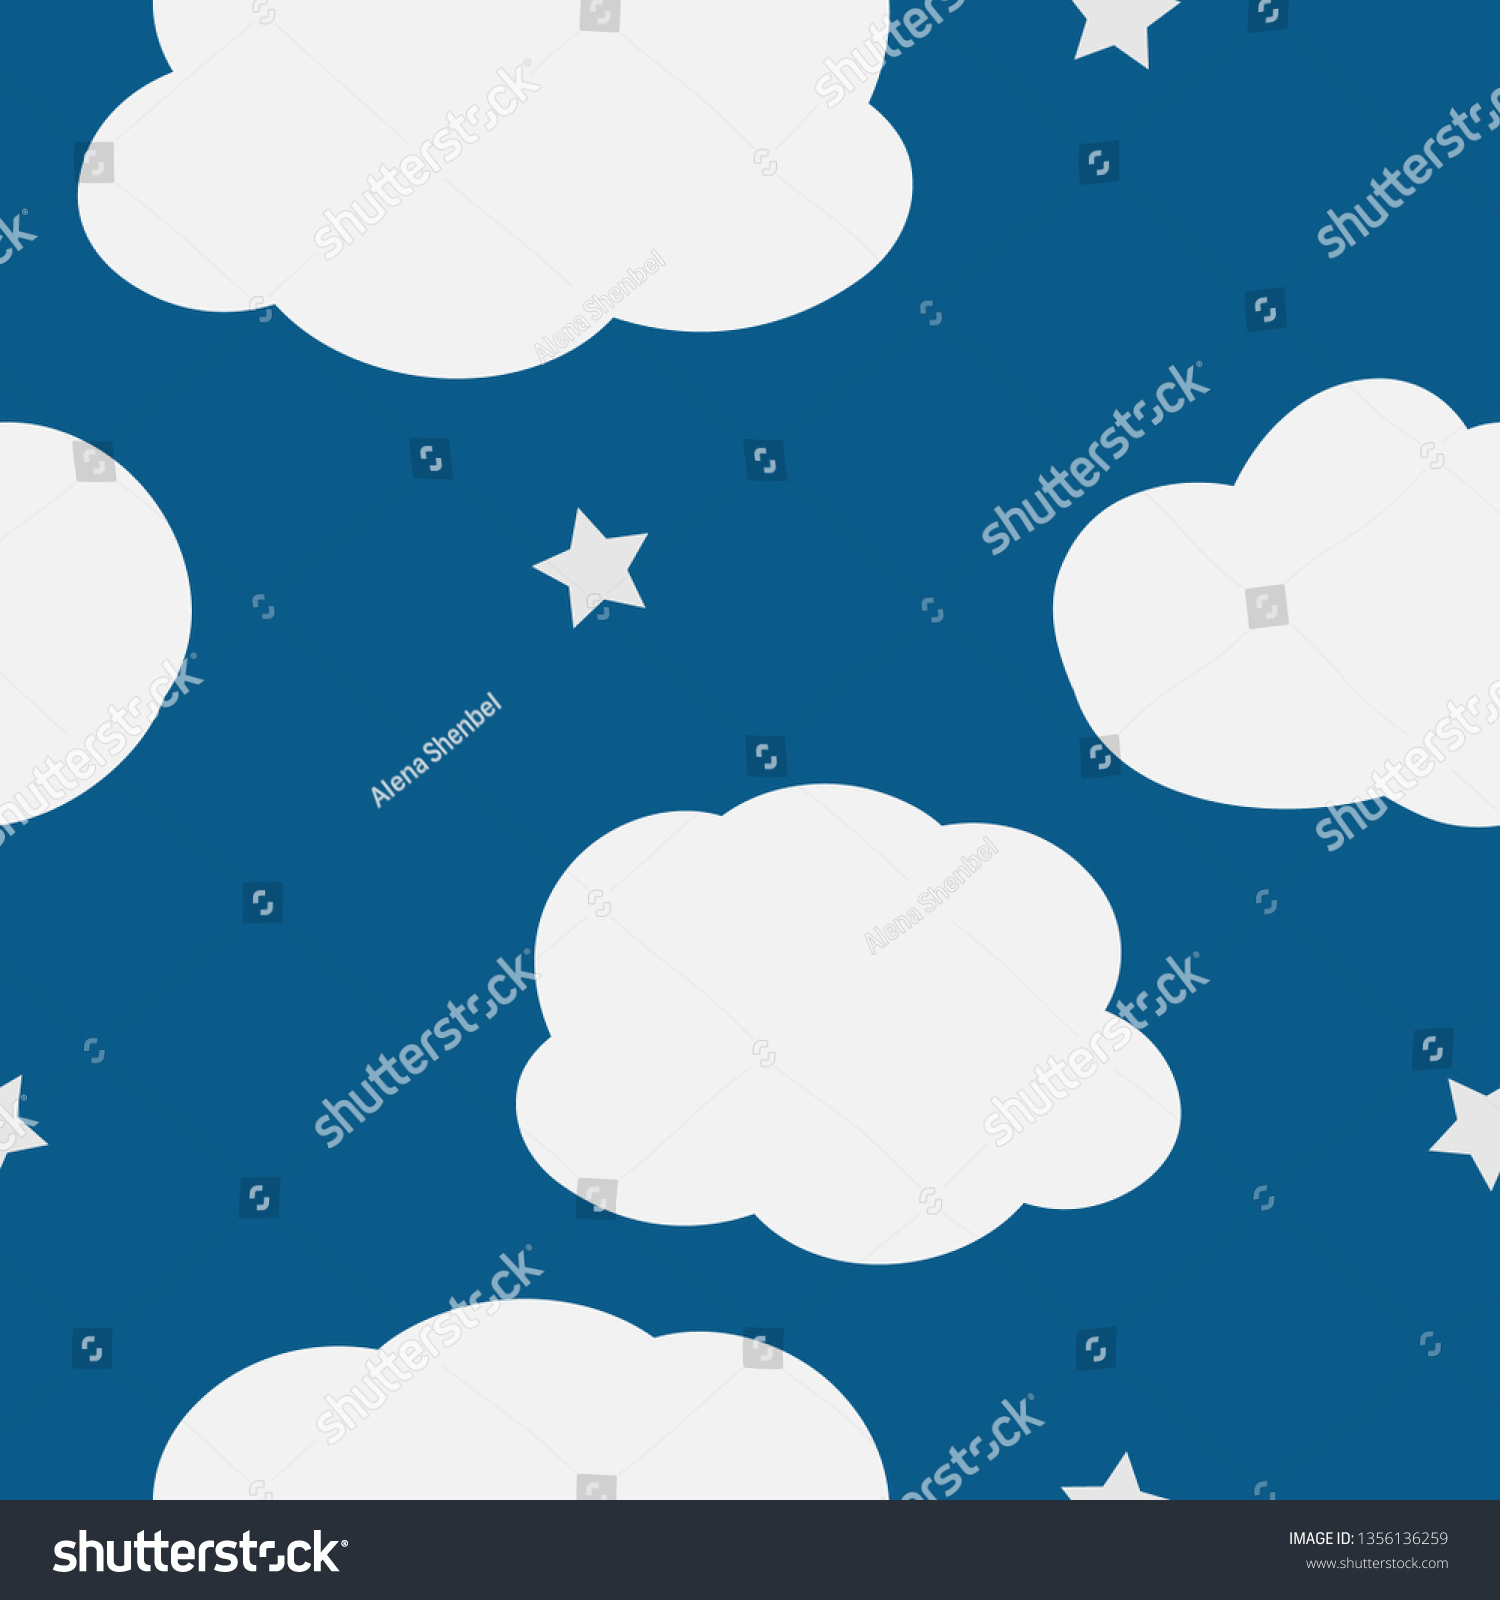 Simple Celestial Pattern Dark Blue Sky Stock Vector Royalty Free 1356136259